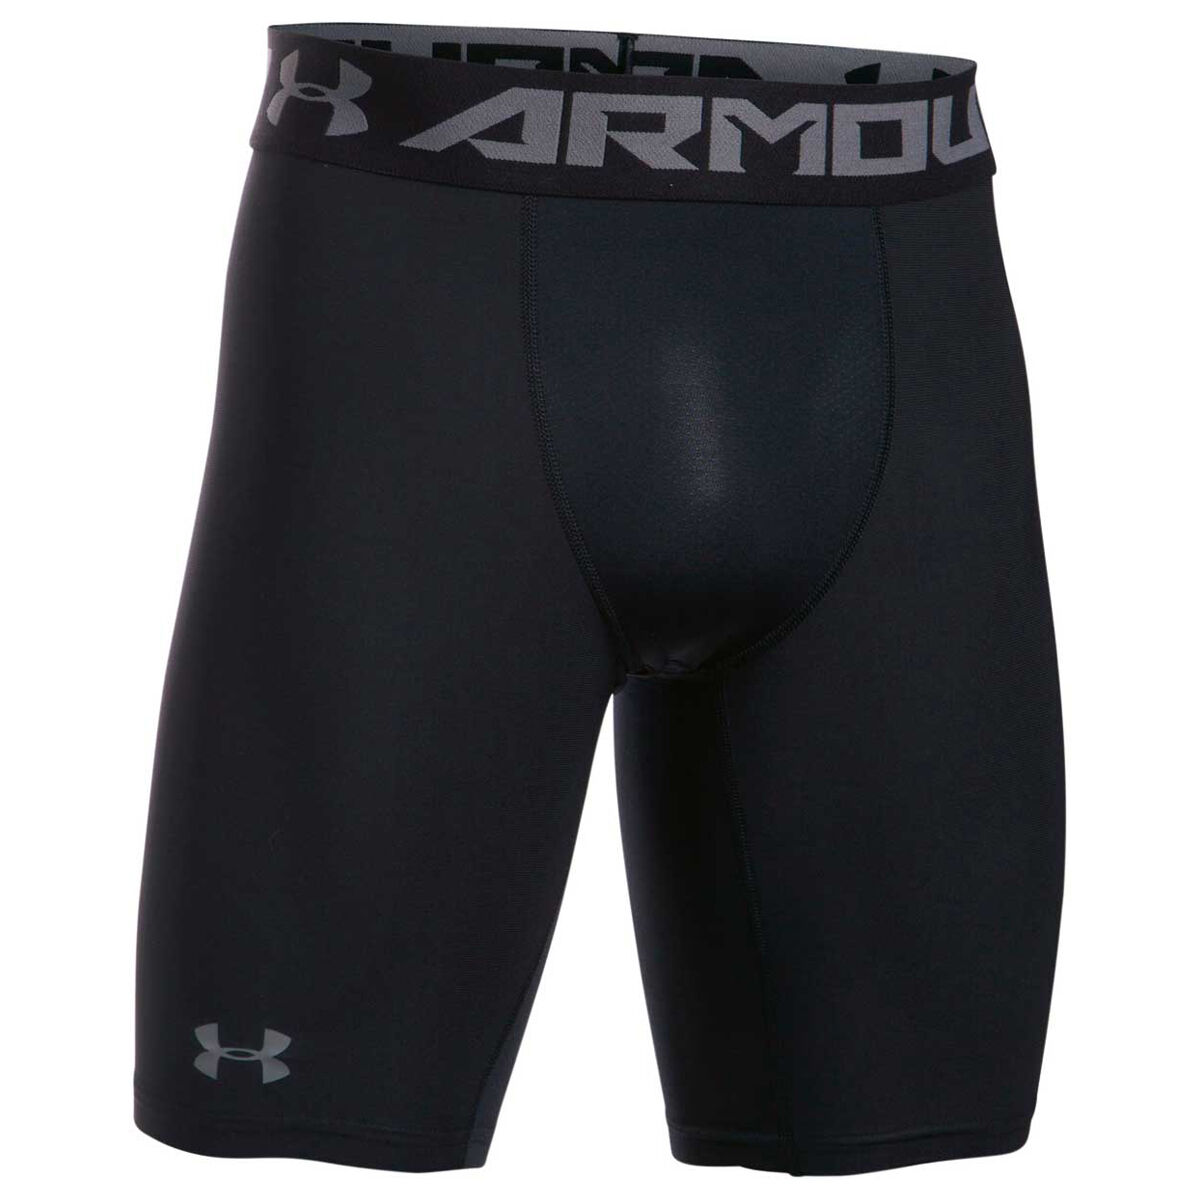 black under armour compression shorts